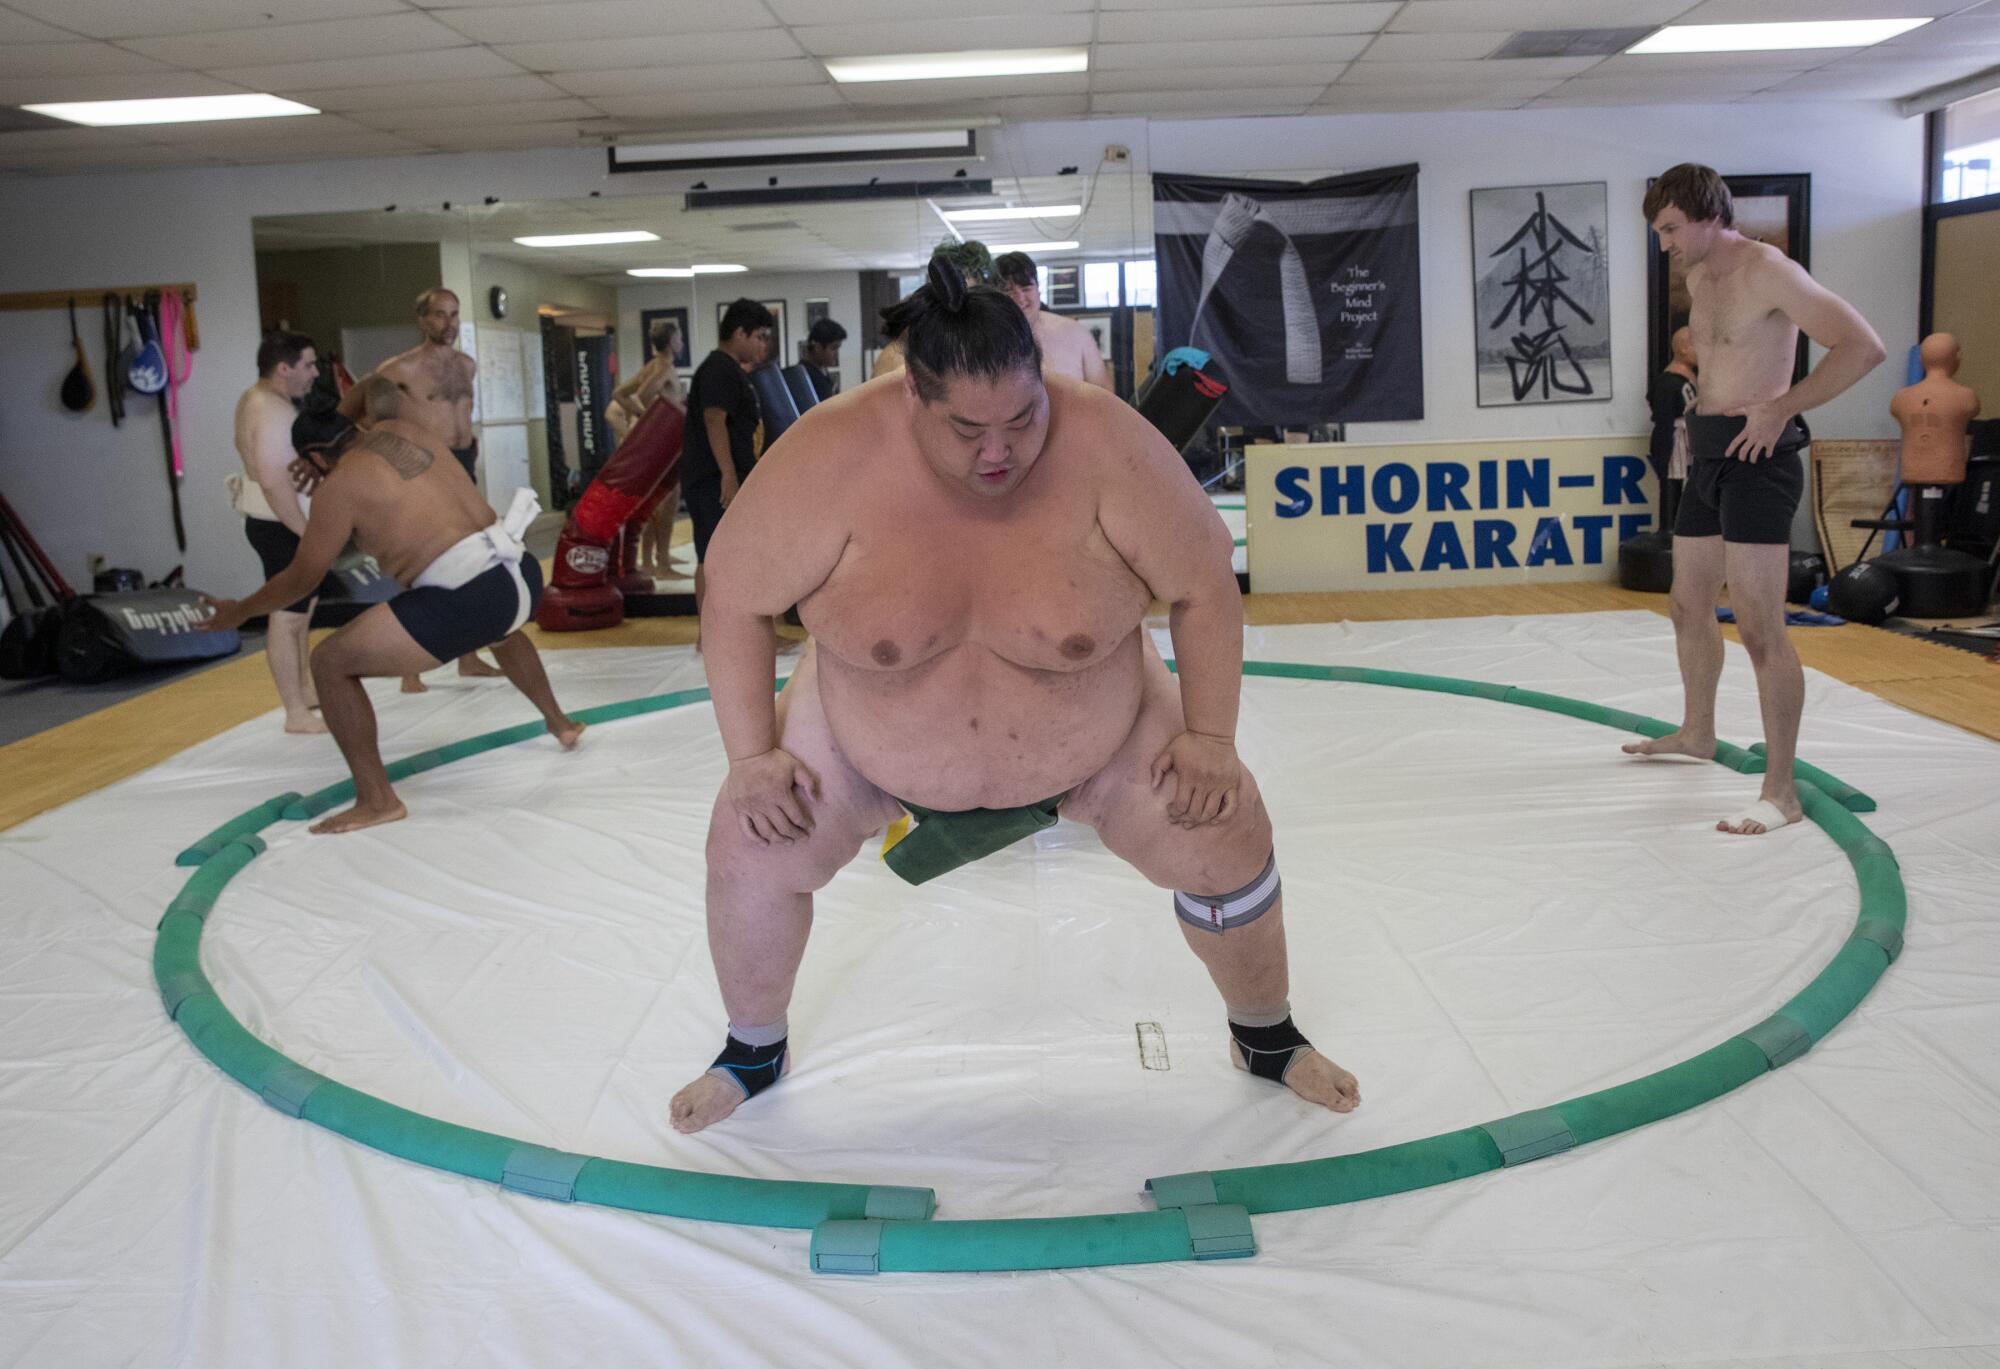 Ryuichi Yamamoto, a former Japanese professional sumo wrestler, instructs proper technique